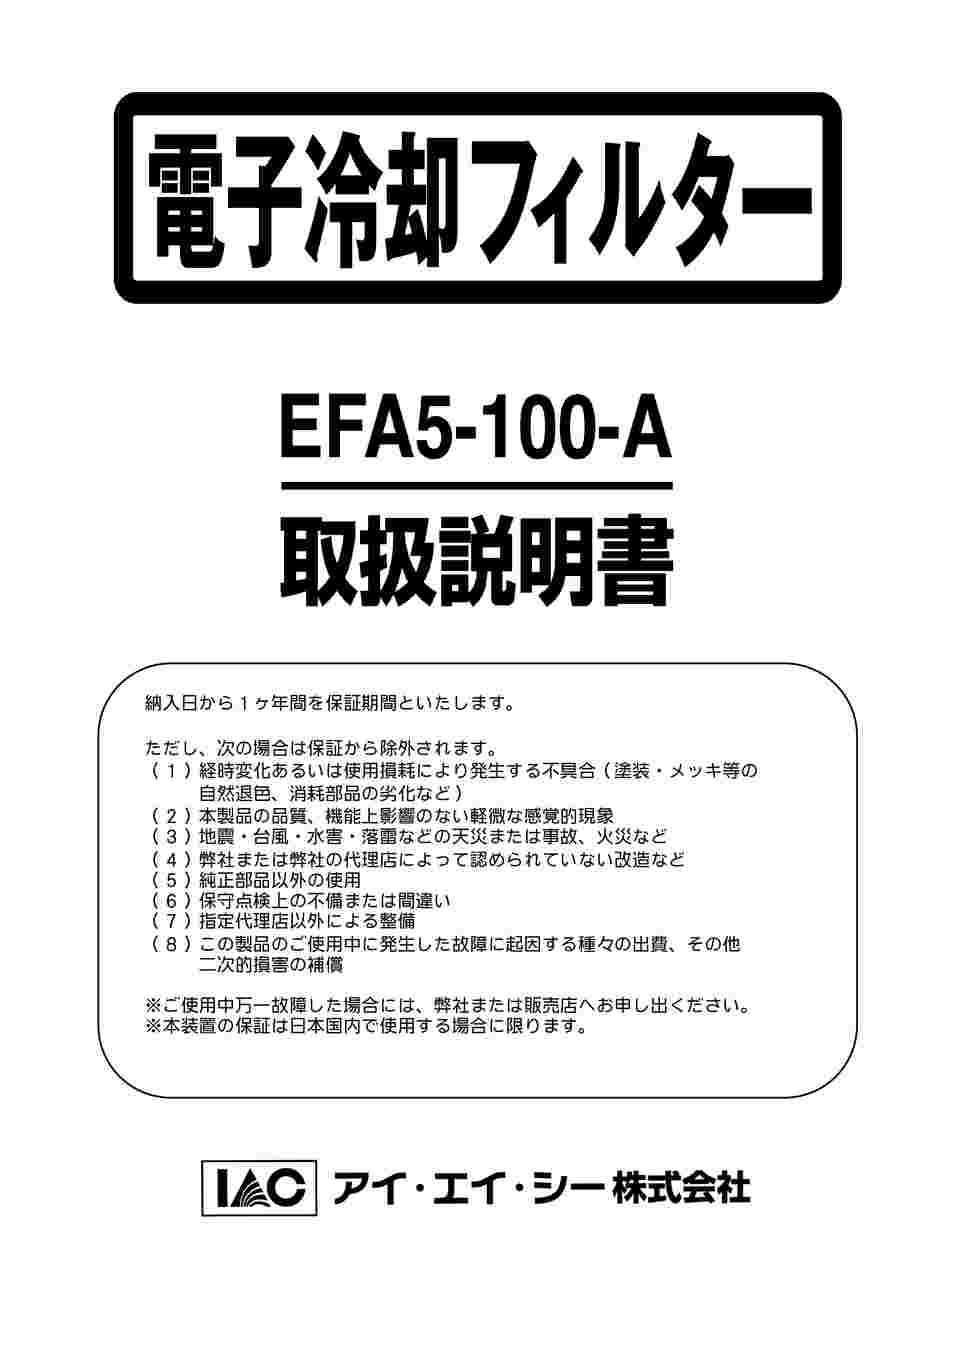 開店記念セール 除湿装置 EFA5-100-A